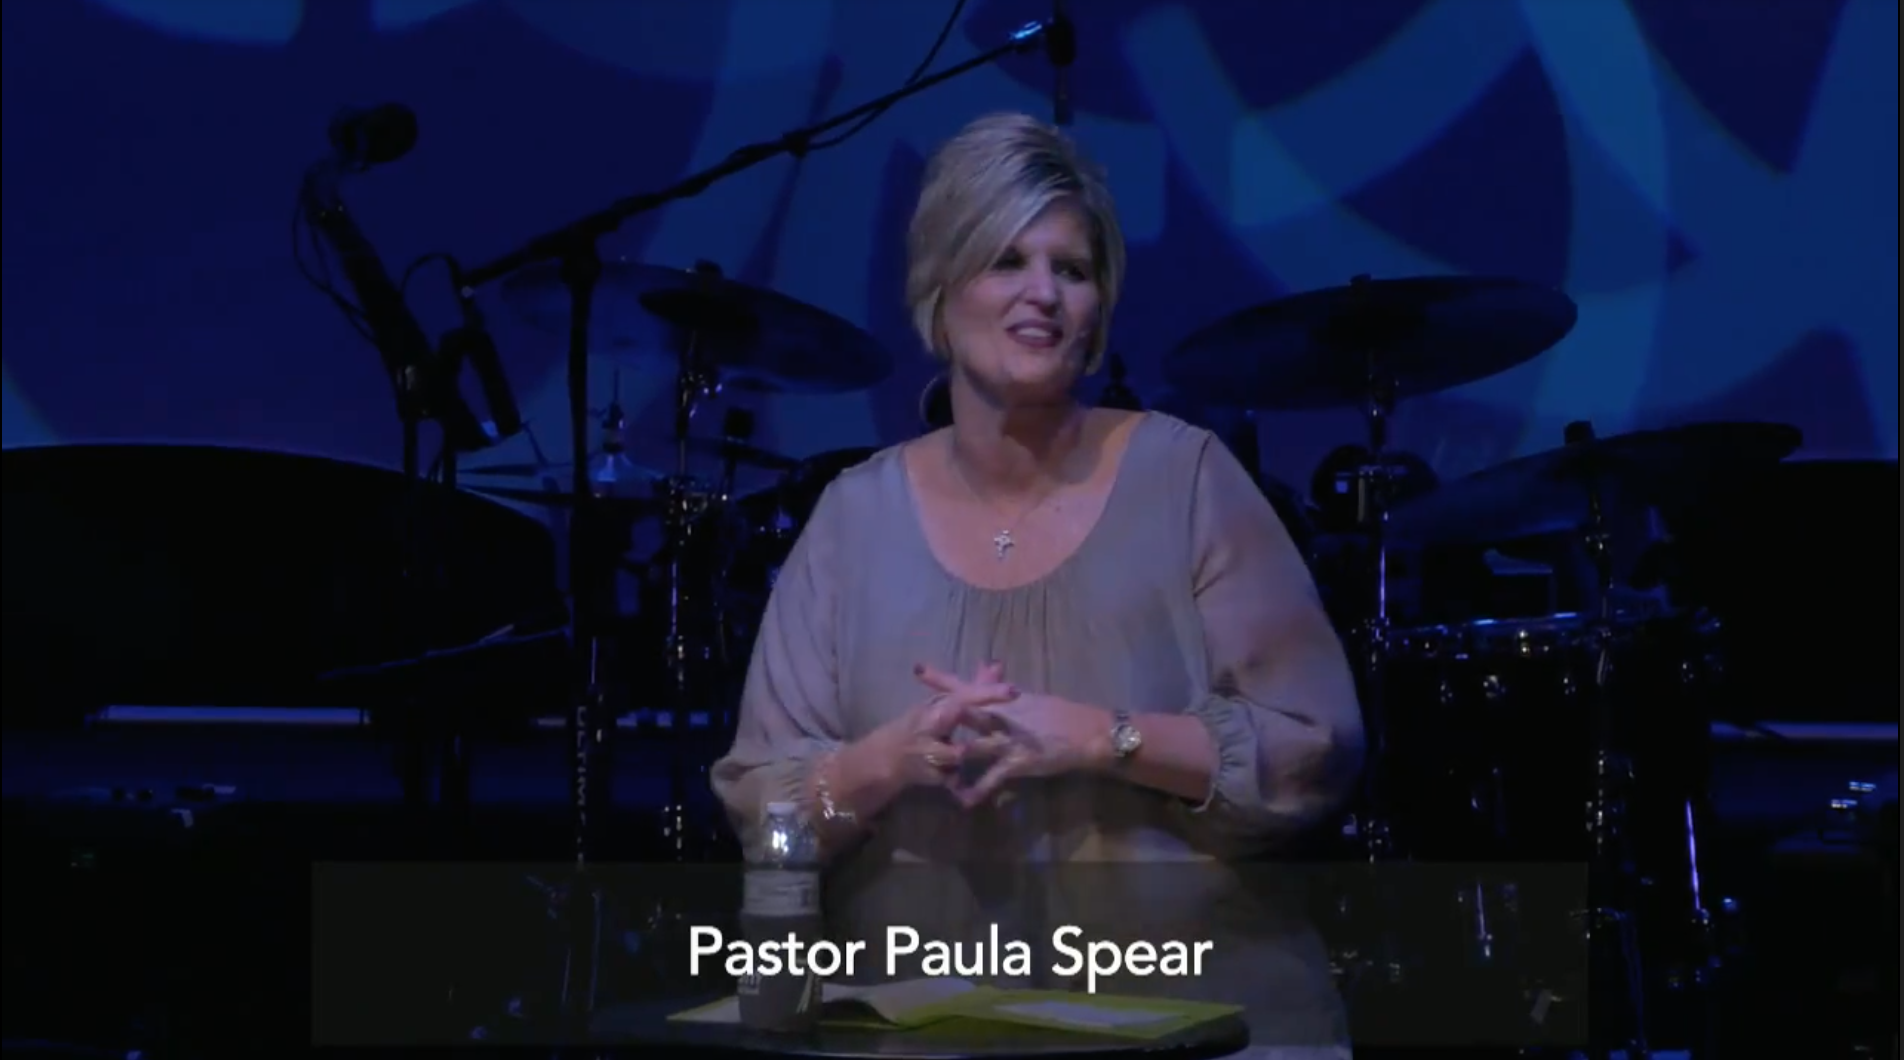 Clip from Paula's December 29, 2019 sermon